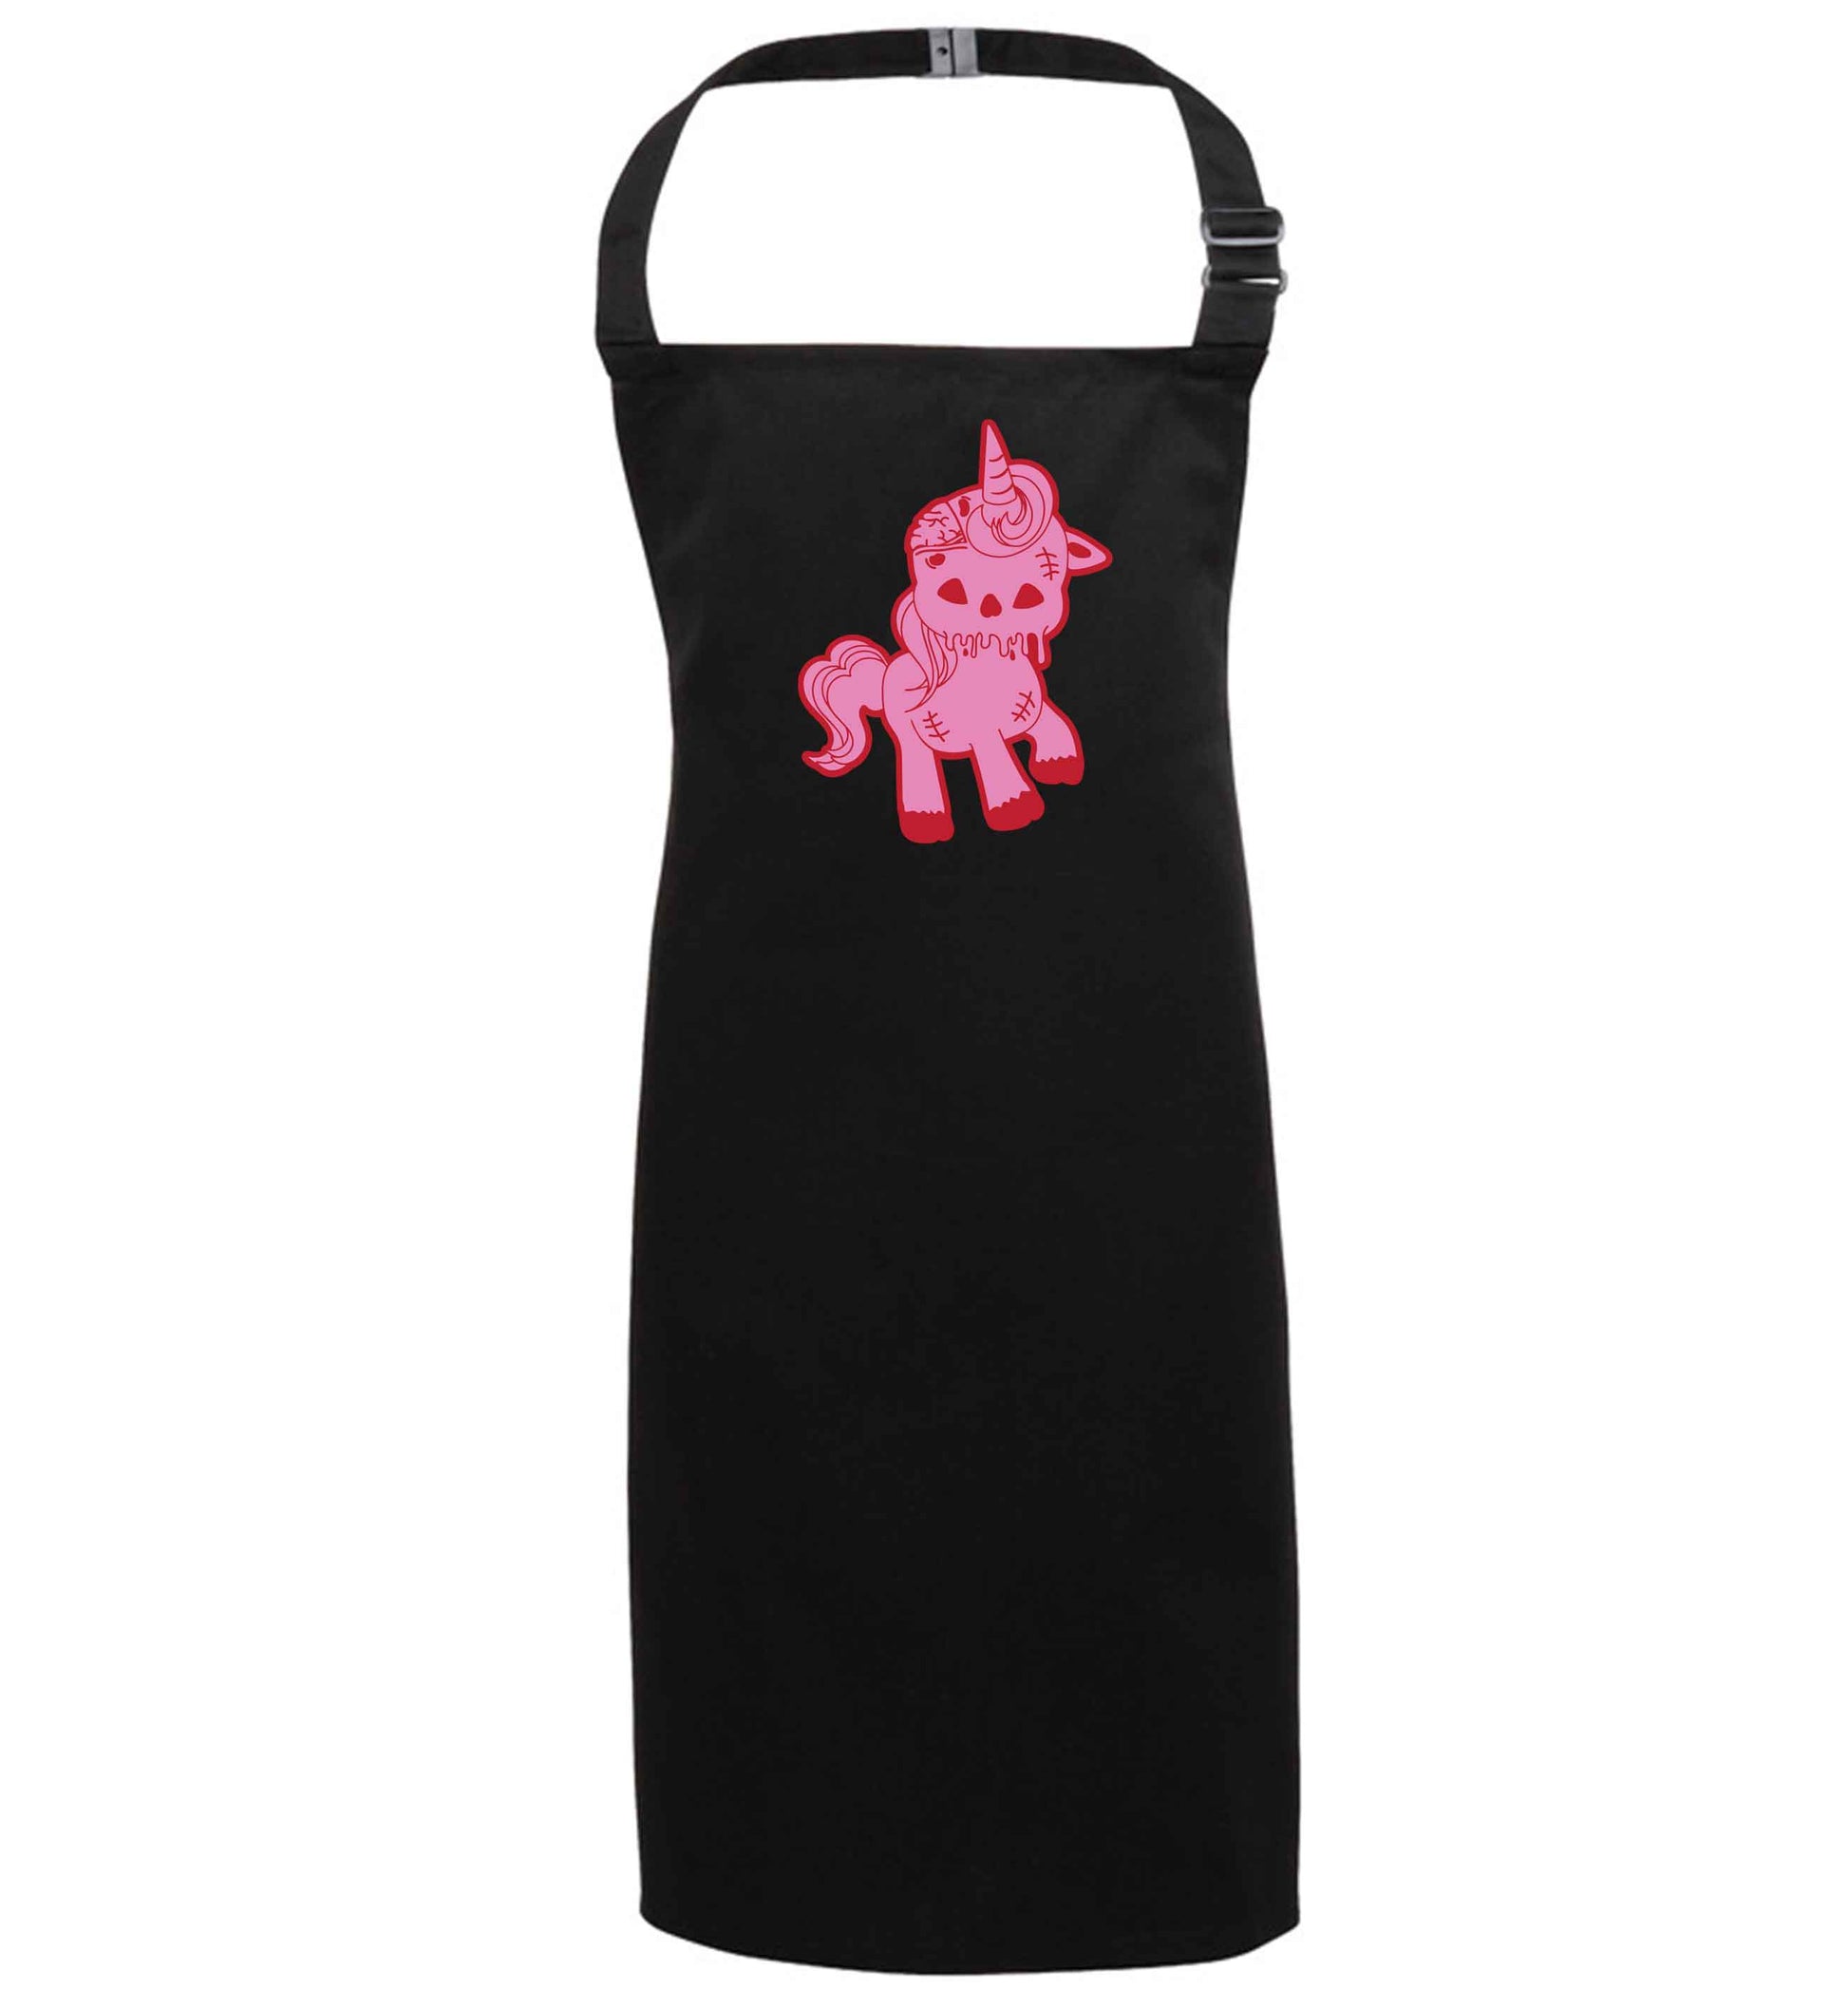 Zombie unicorn zombiecorn black apron 7-10 years